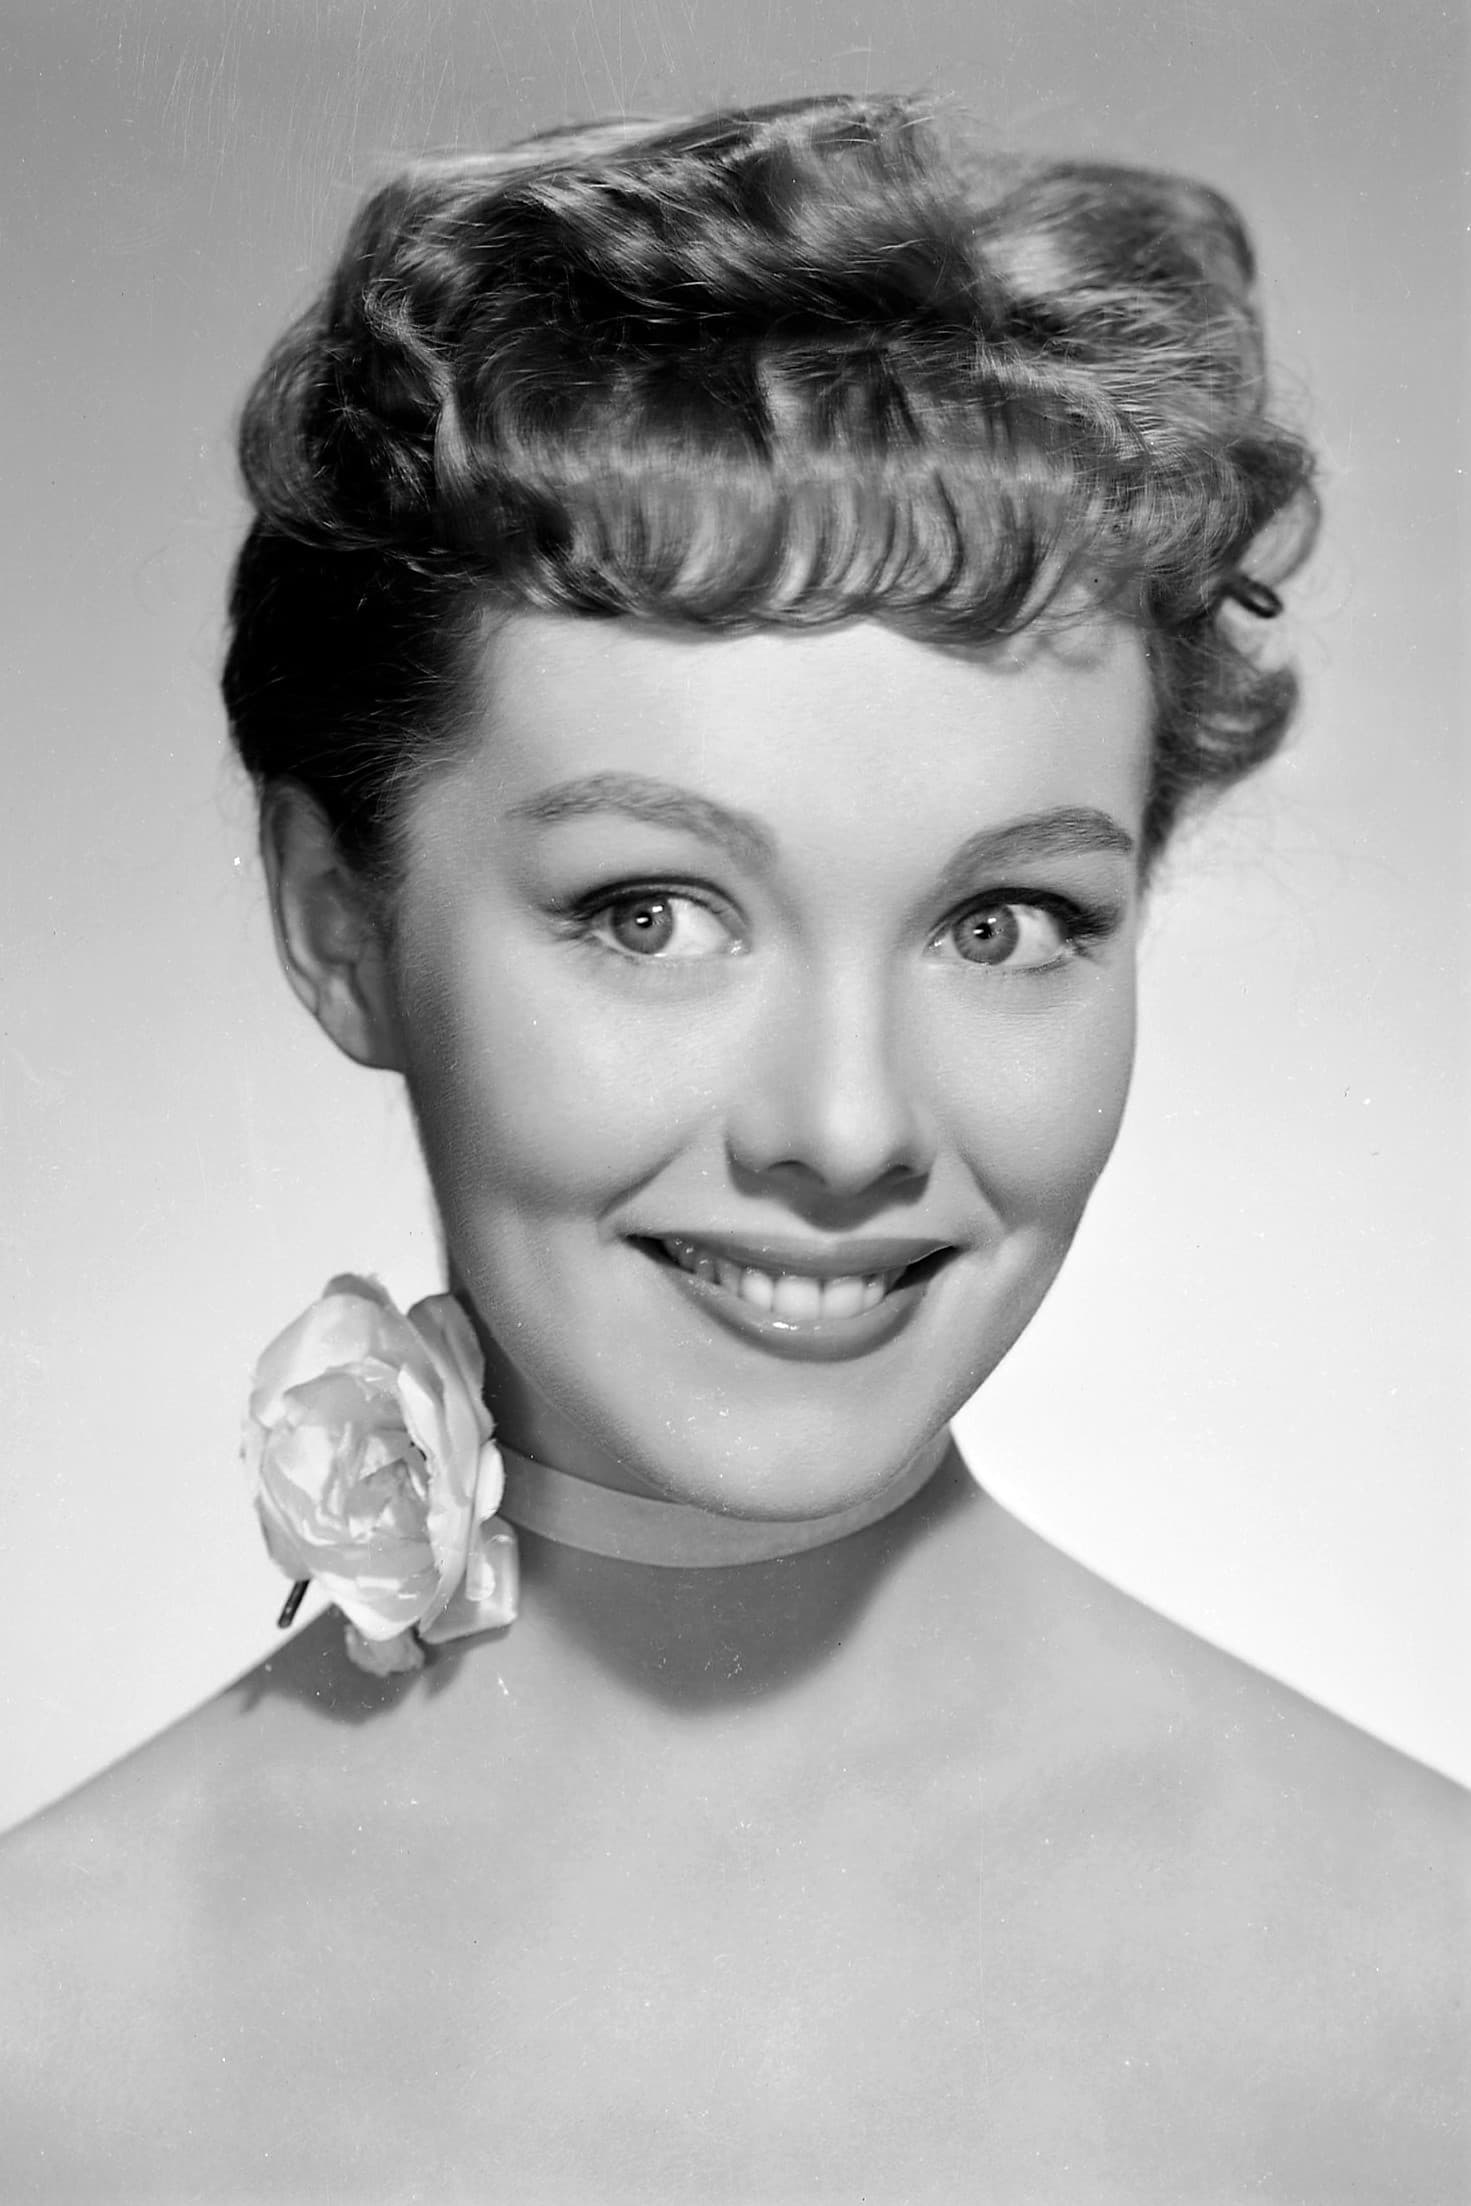 Phyllis Kirk